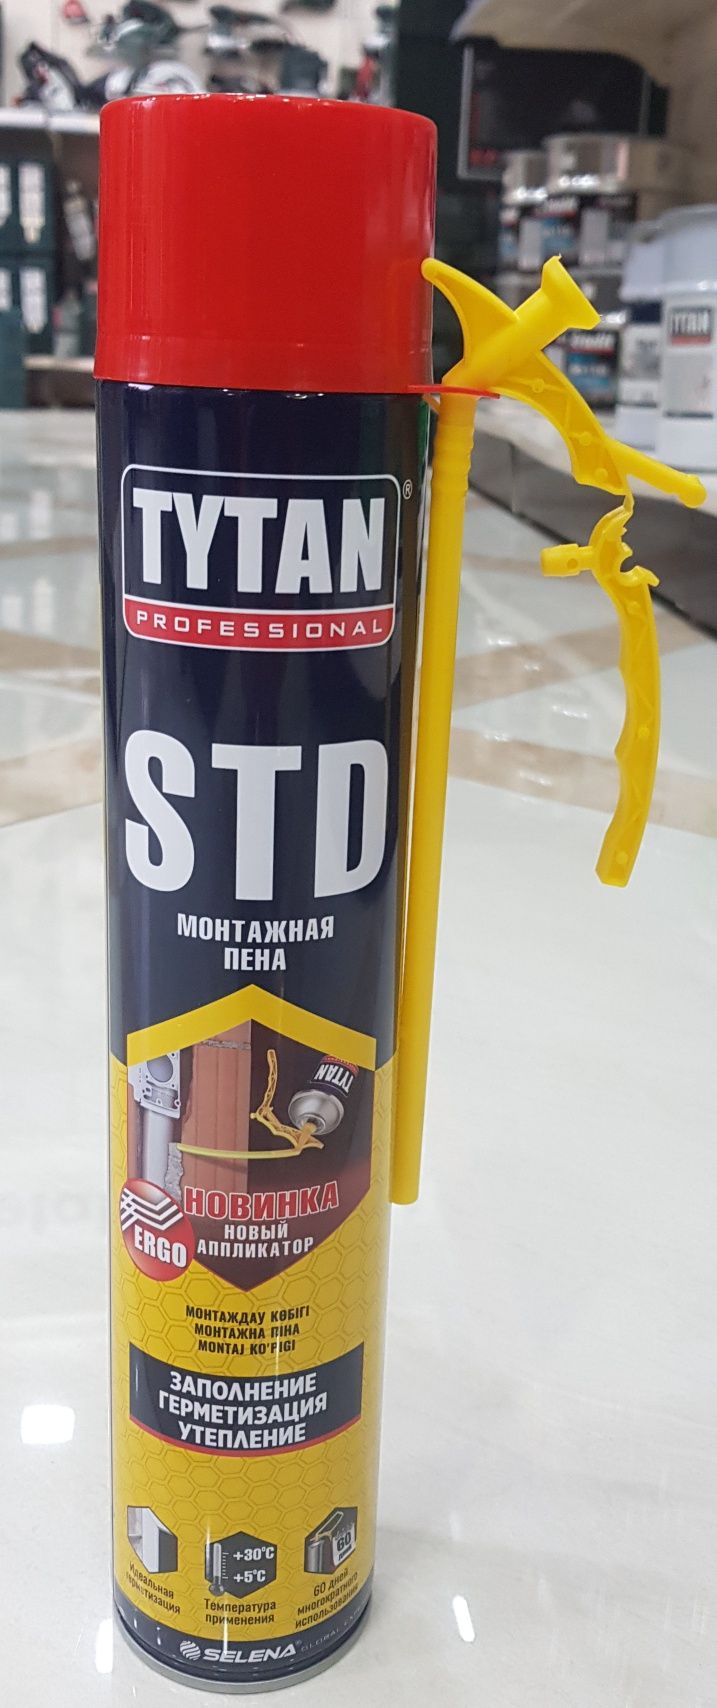 Tytan пена Optom